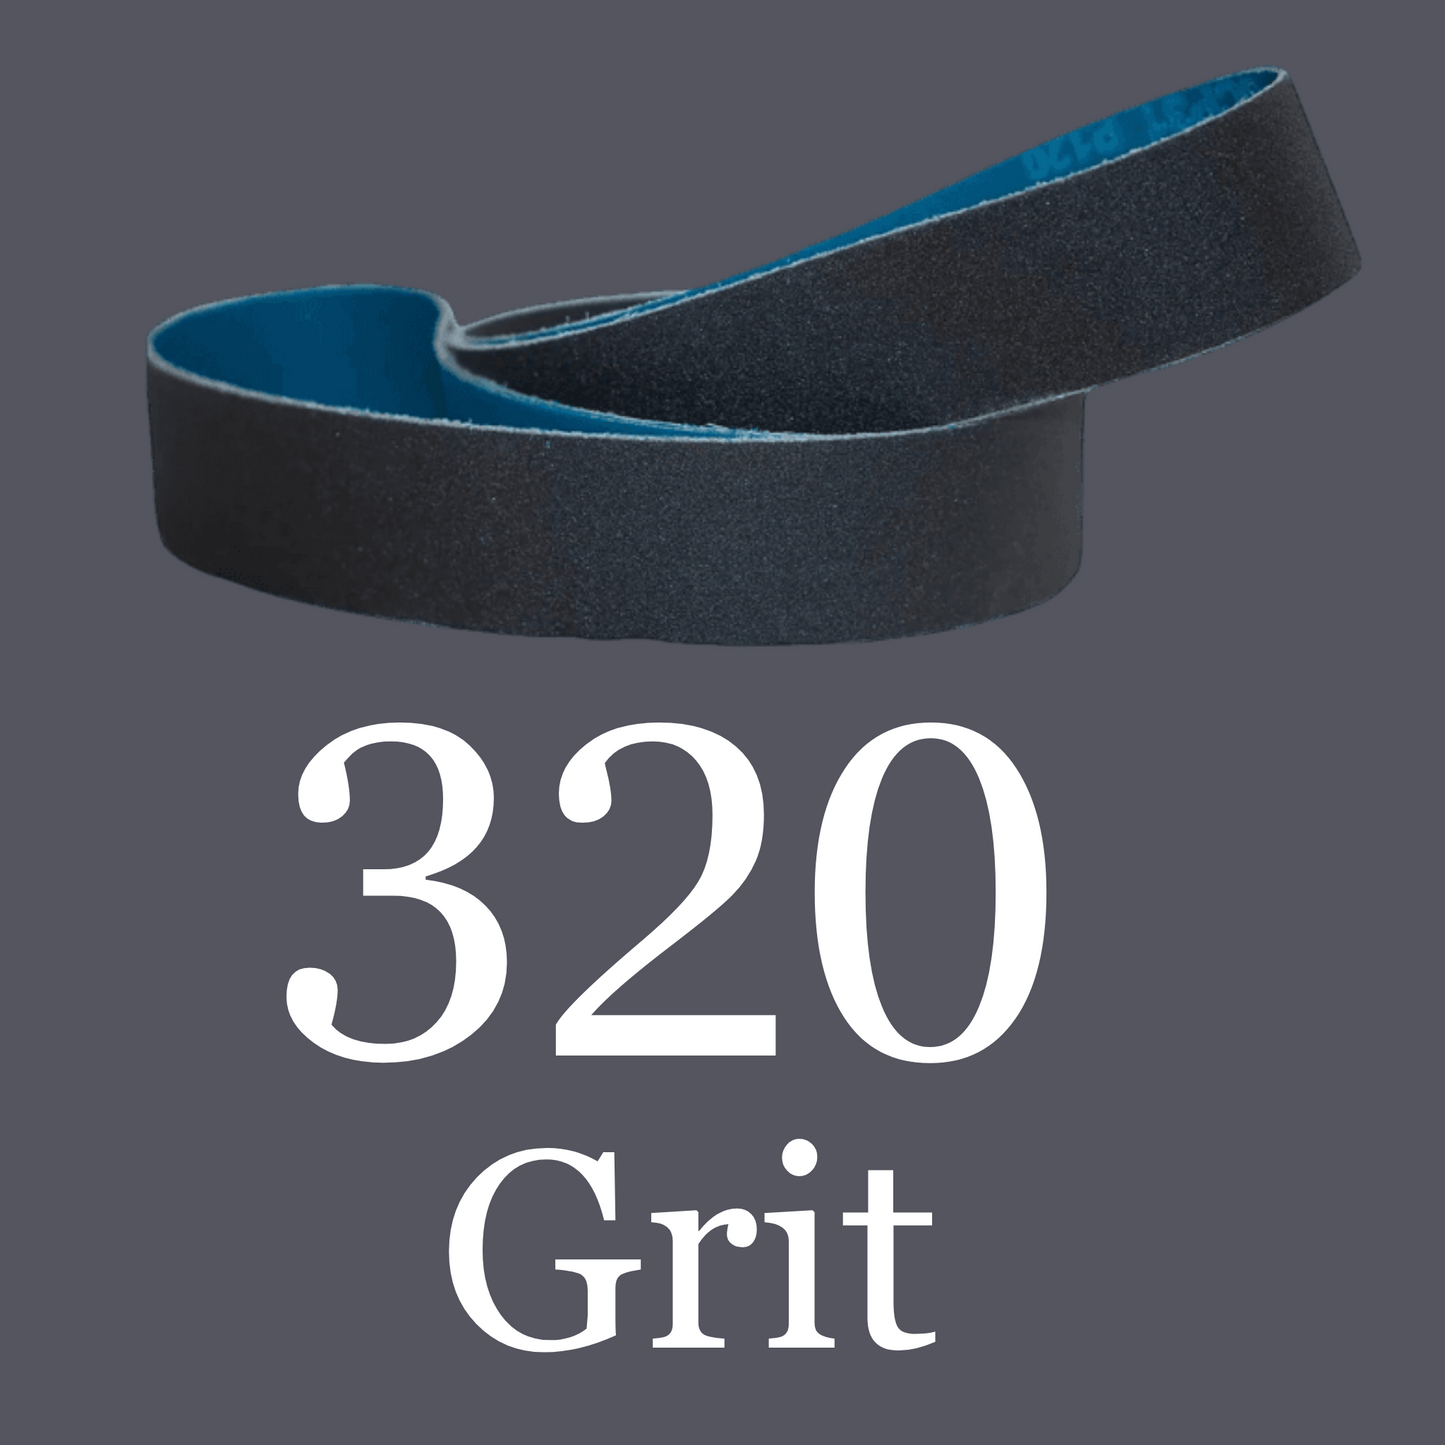  1” x 30” Premium Black Silicon Carbide Finishing Belts 320 Grit